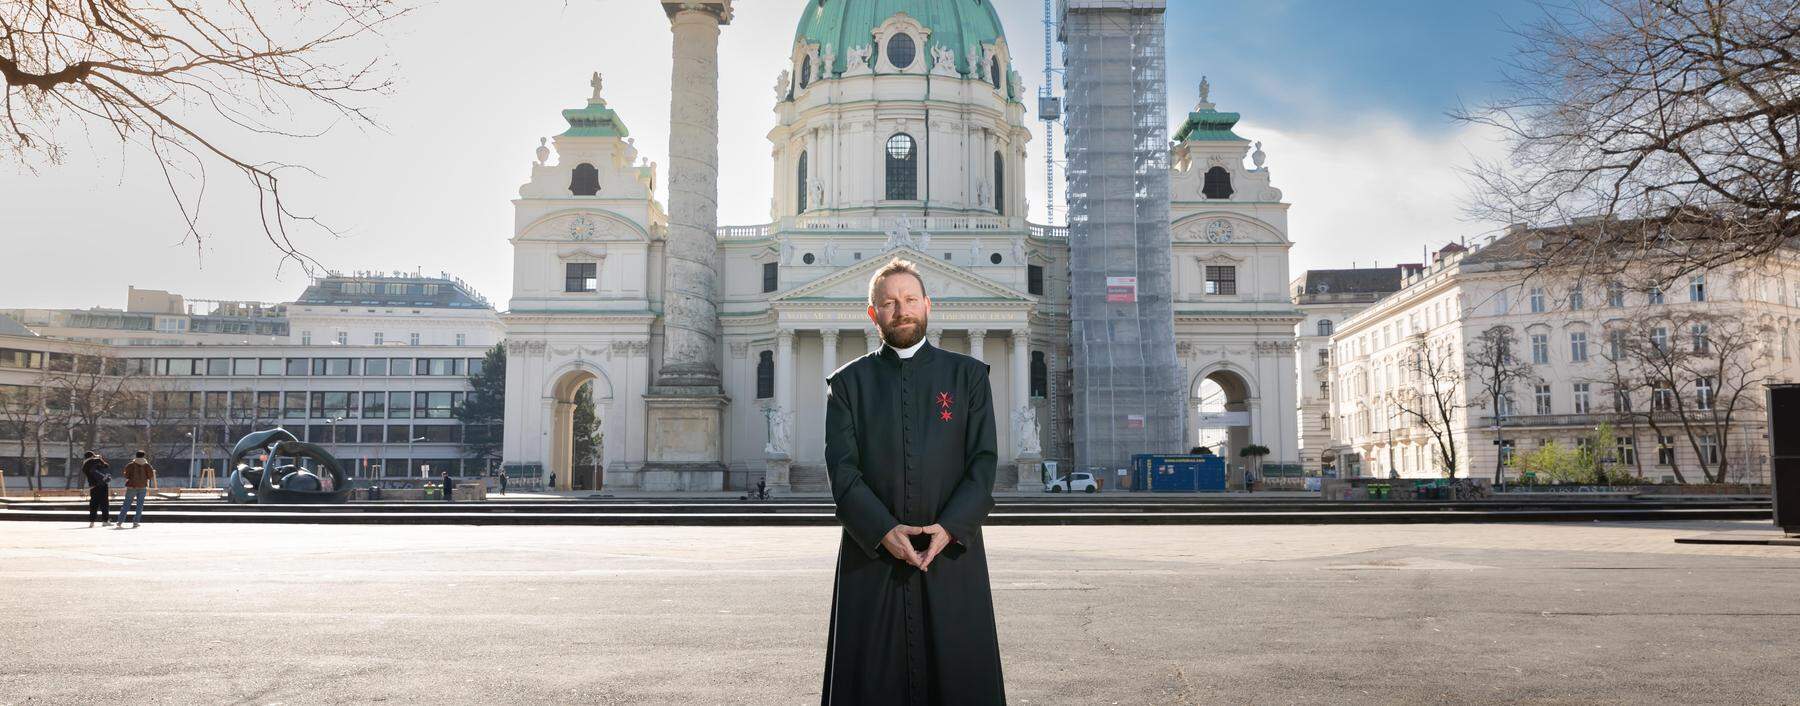 Pater Marek Pučalík ist seit September 2020 Rektor der Karlskirche. 